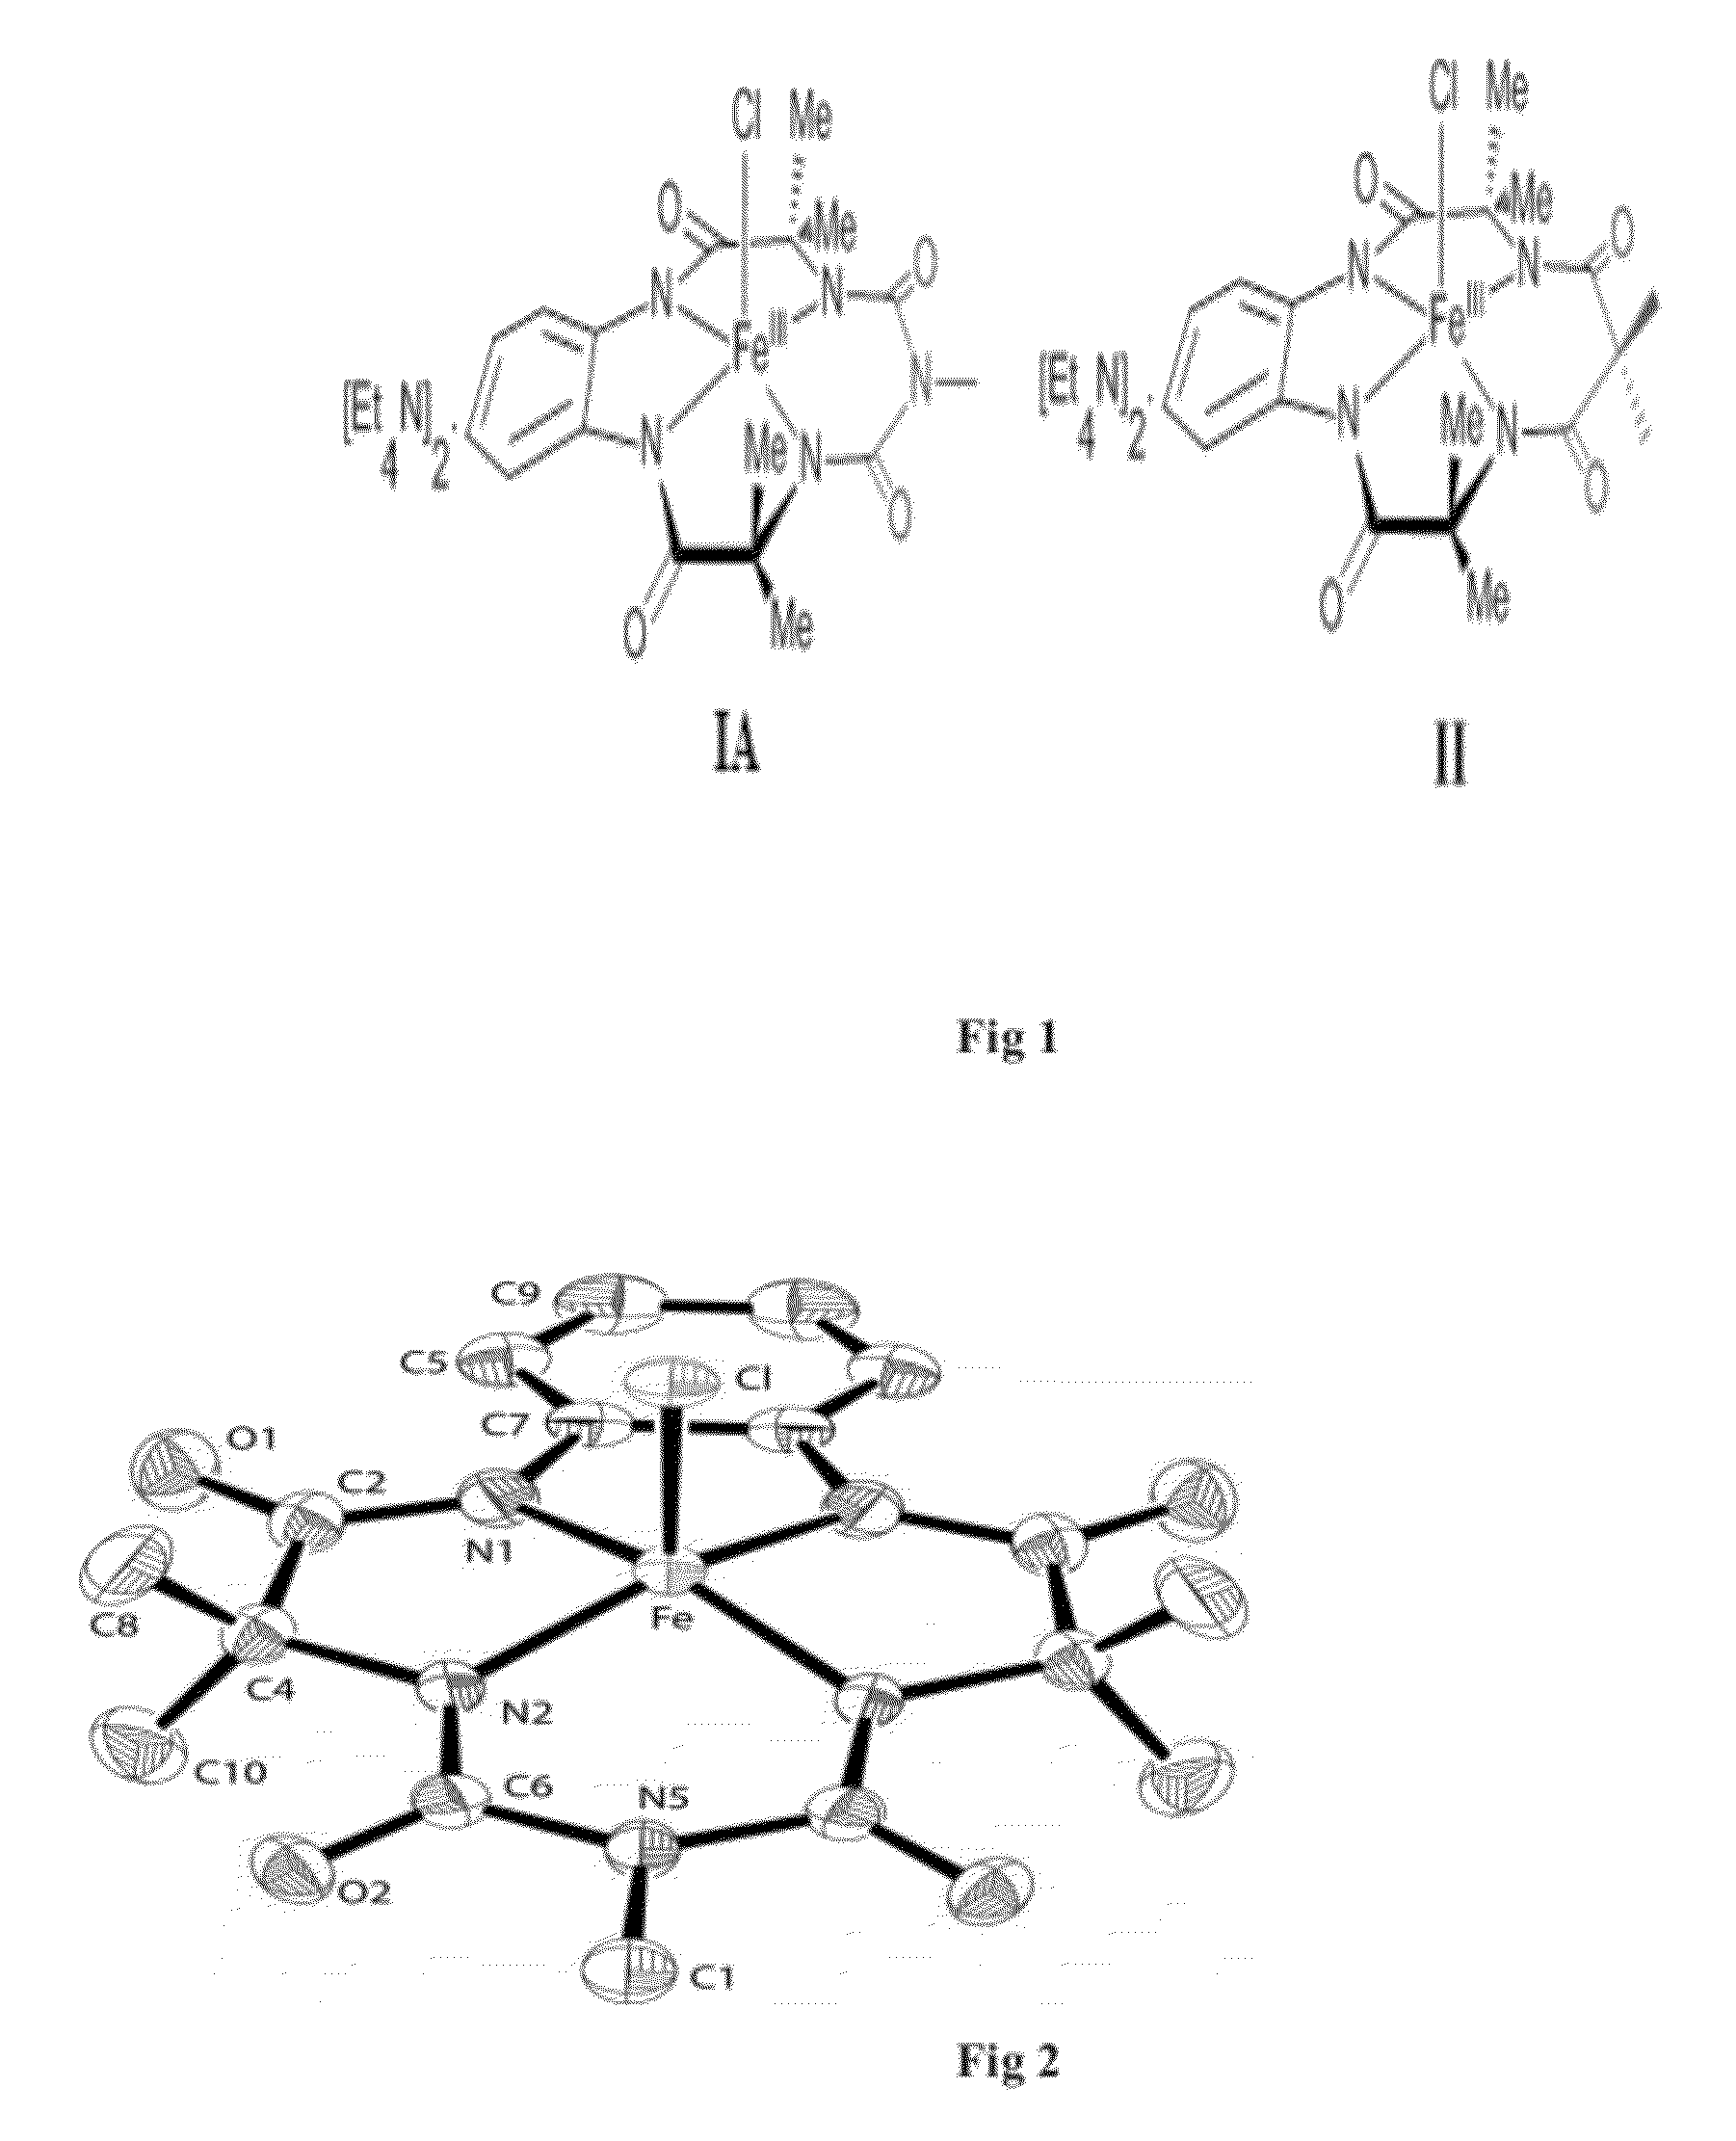 Metal (III) Complex Of Biuret-Amide Based Macrocyclic Ligand As Green Oxidation Catalyst